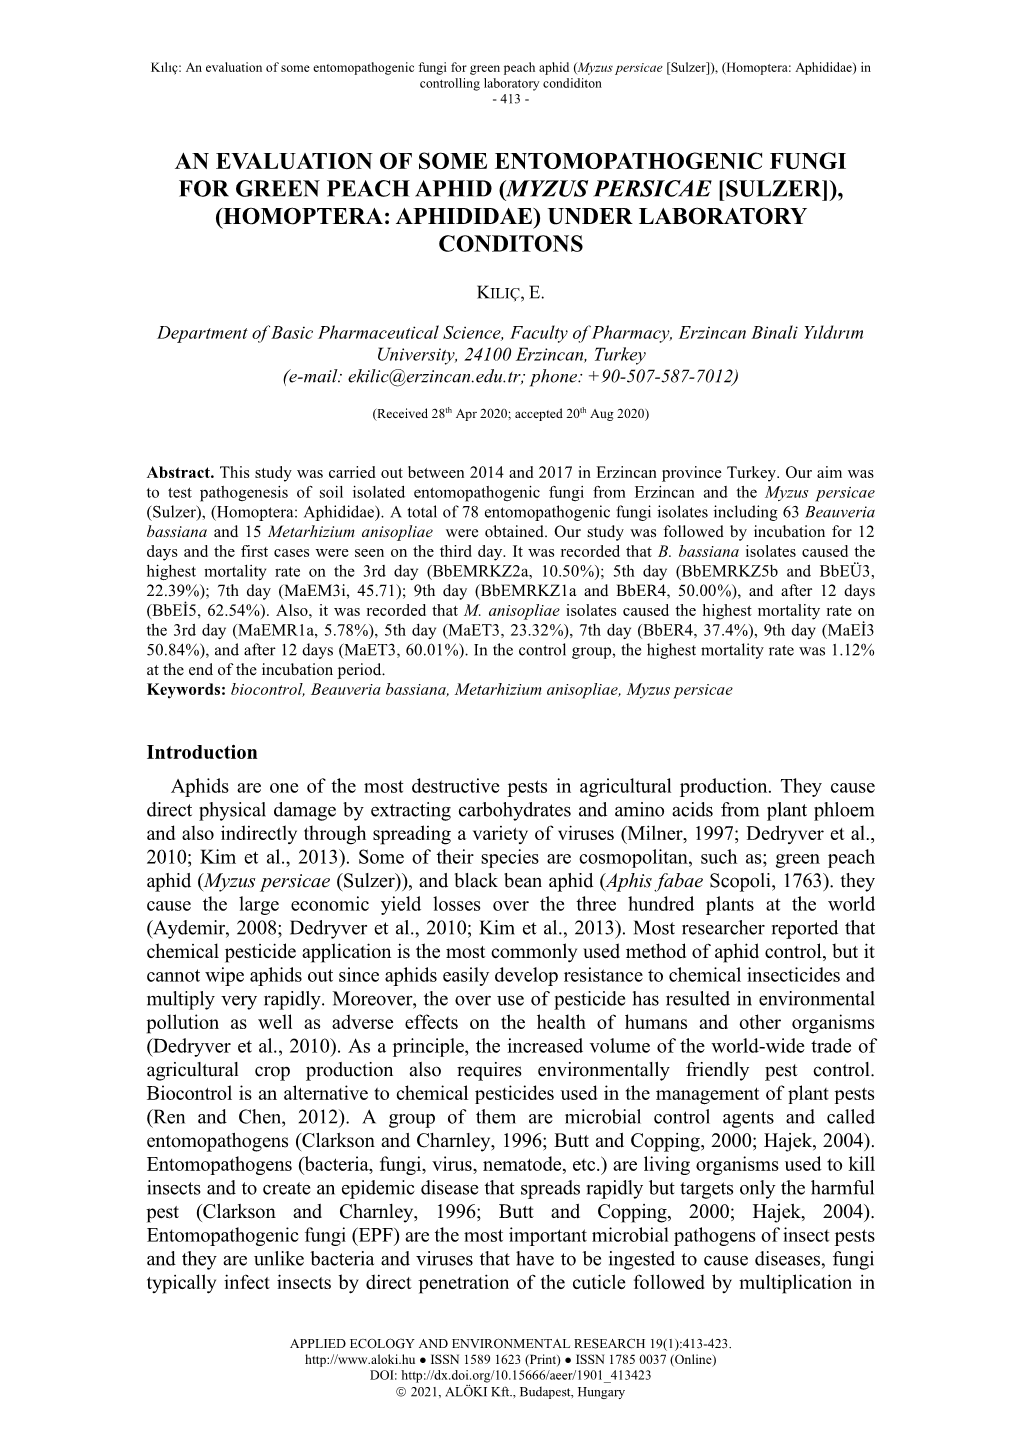 (Myzus Persicae [Sulzer]), (Homoptera: Aphididae) in Controlling Laboratory Condiditon - 413